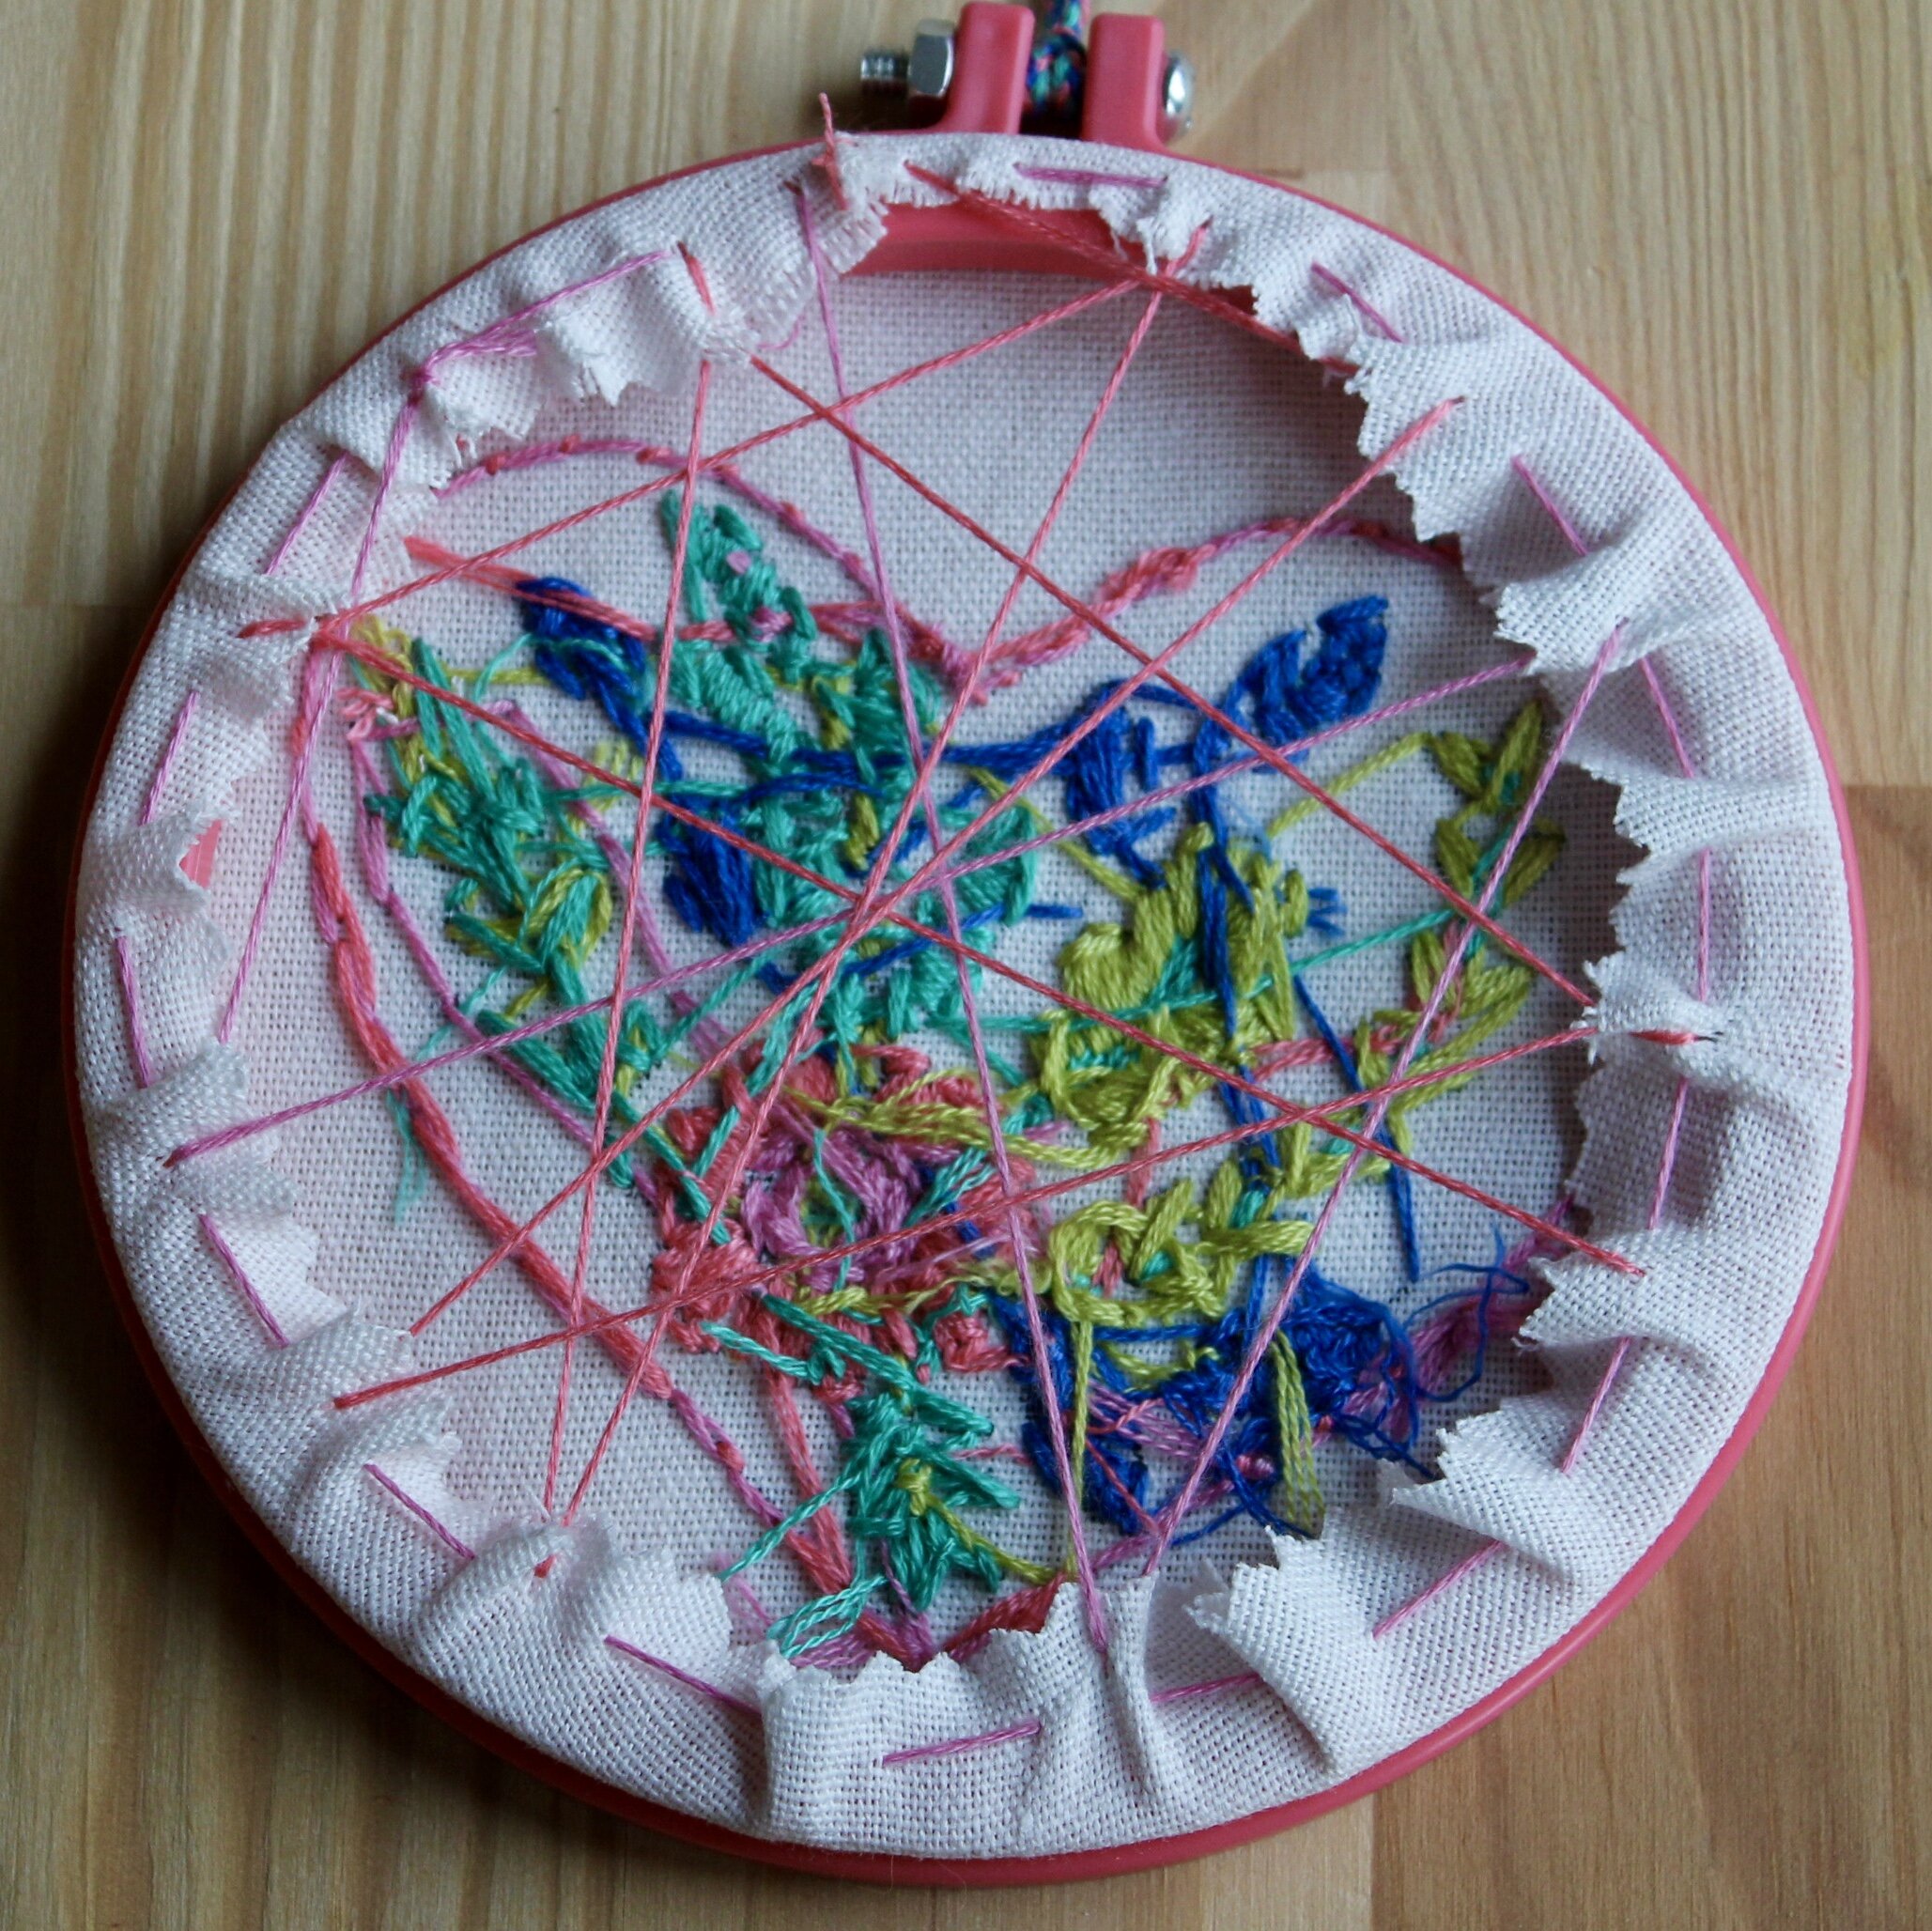 How-To: Embroidery Hoop Storage Bins - Make